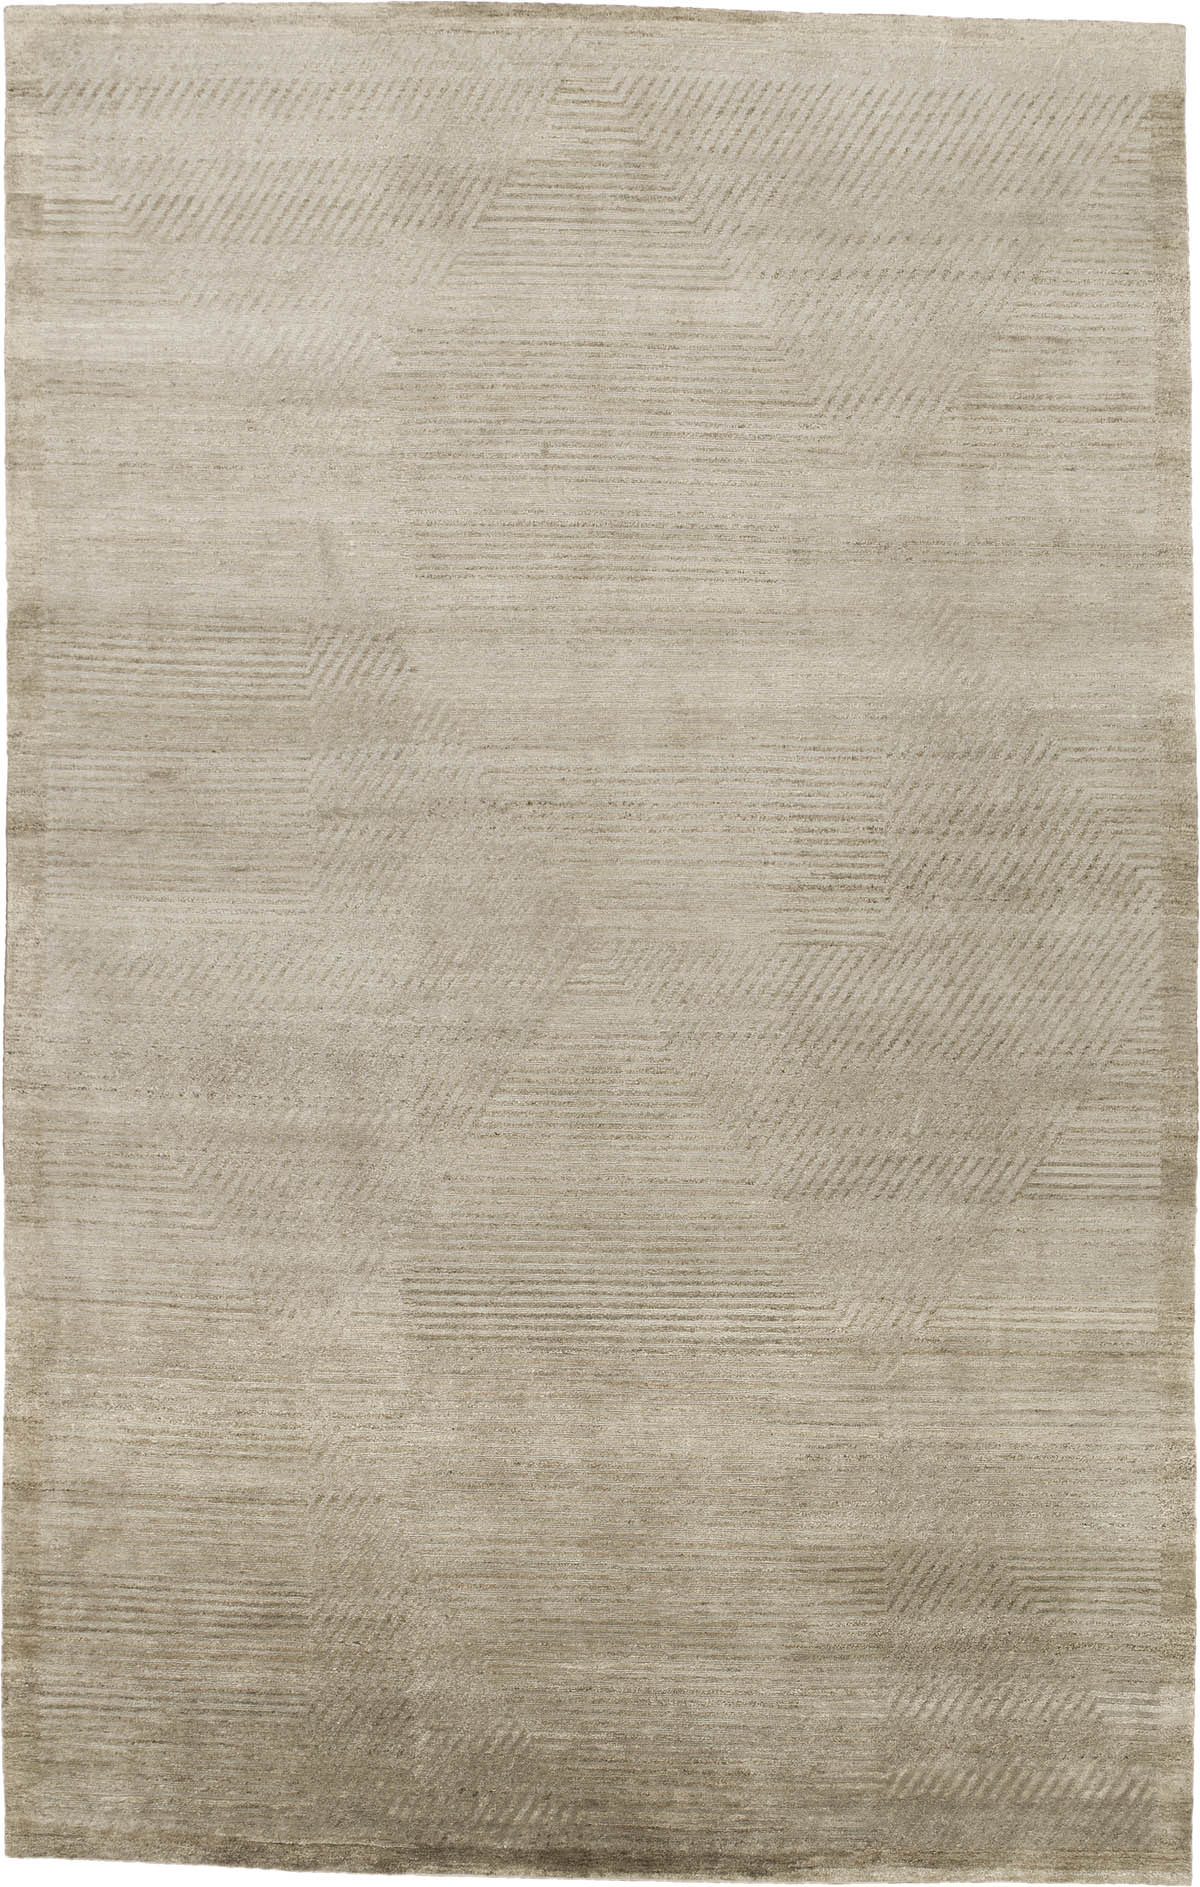 26110 Boggeri | Custom Modern & 20th Century Design Carpet | FJ Hakimian | Carpet Gallery in NYC